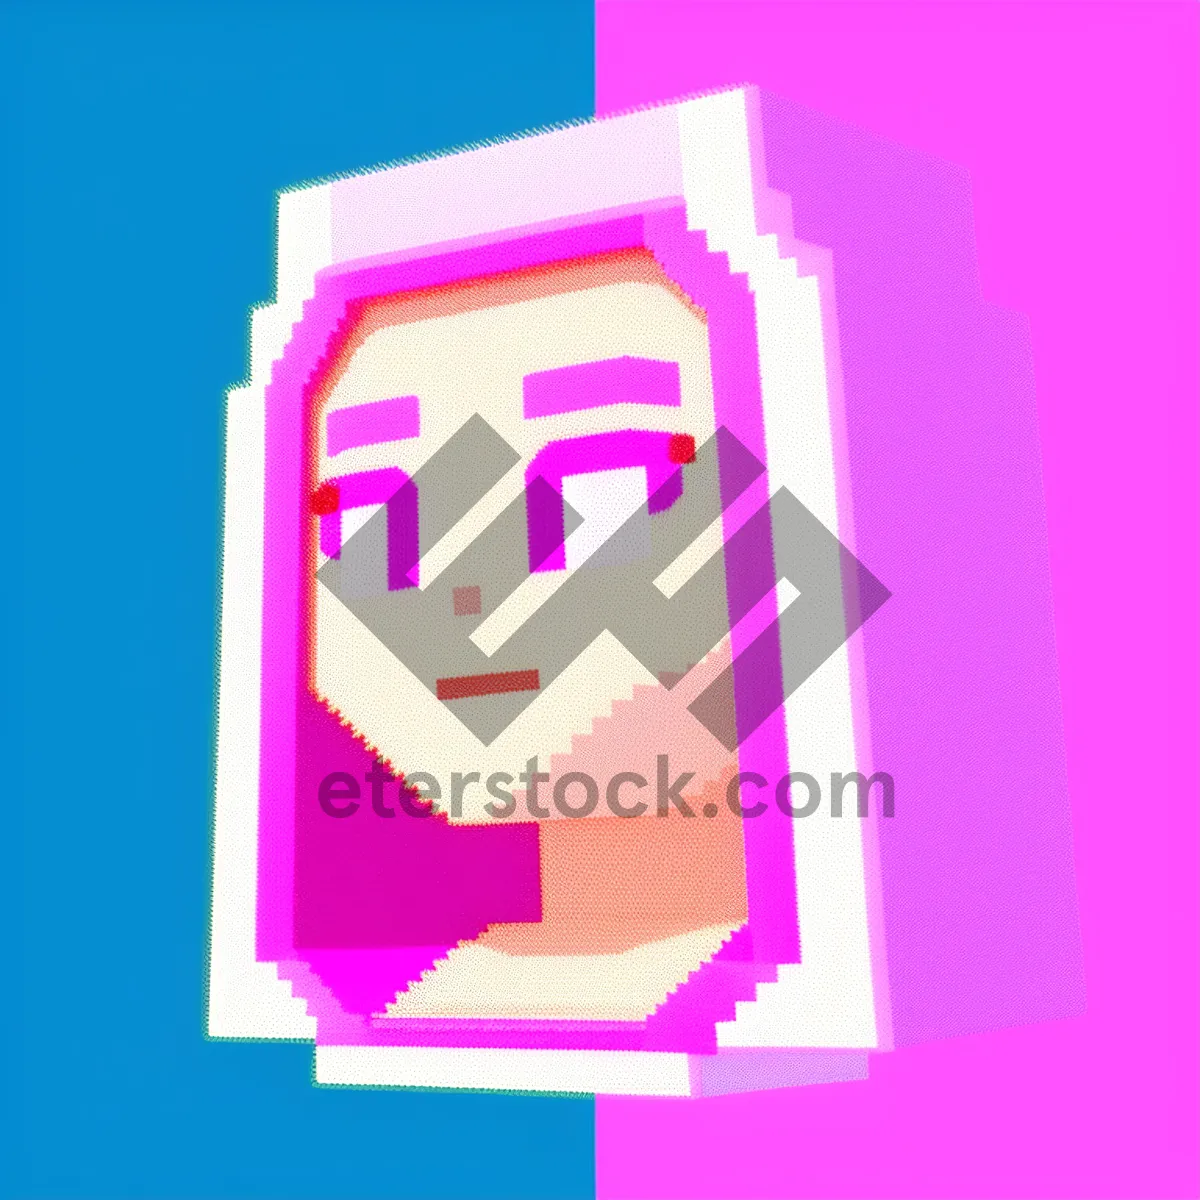 Picture of Sleek 3D Business Symbol Design